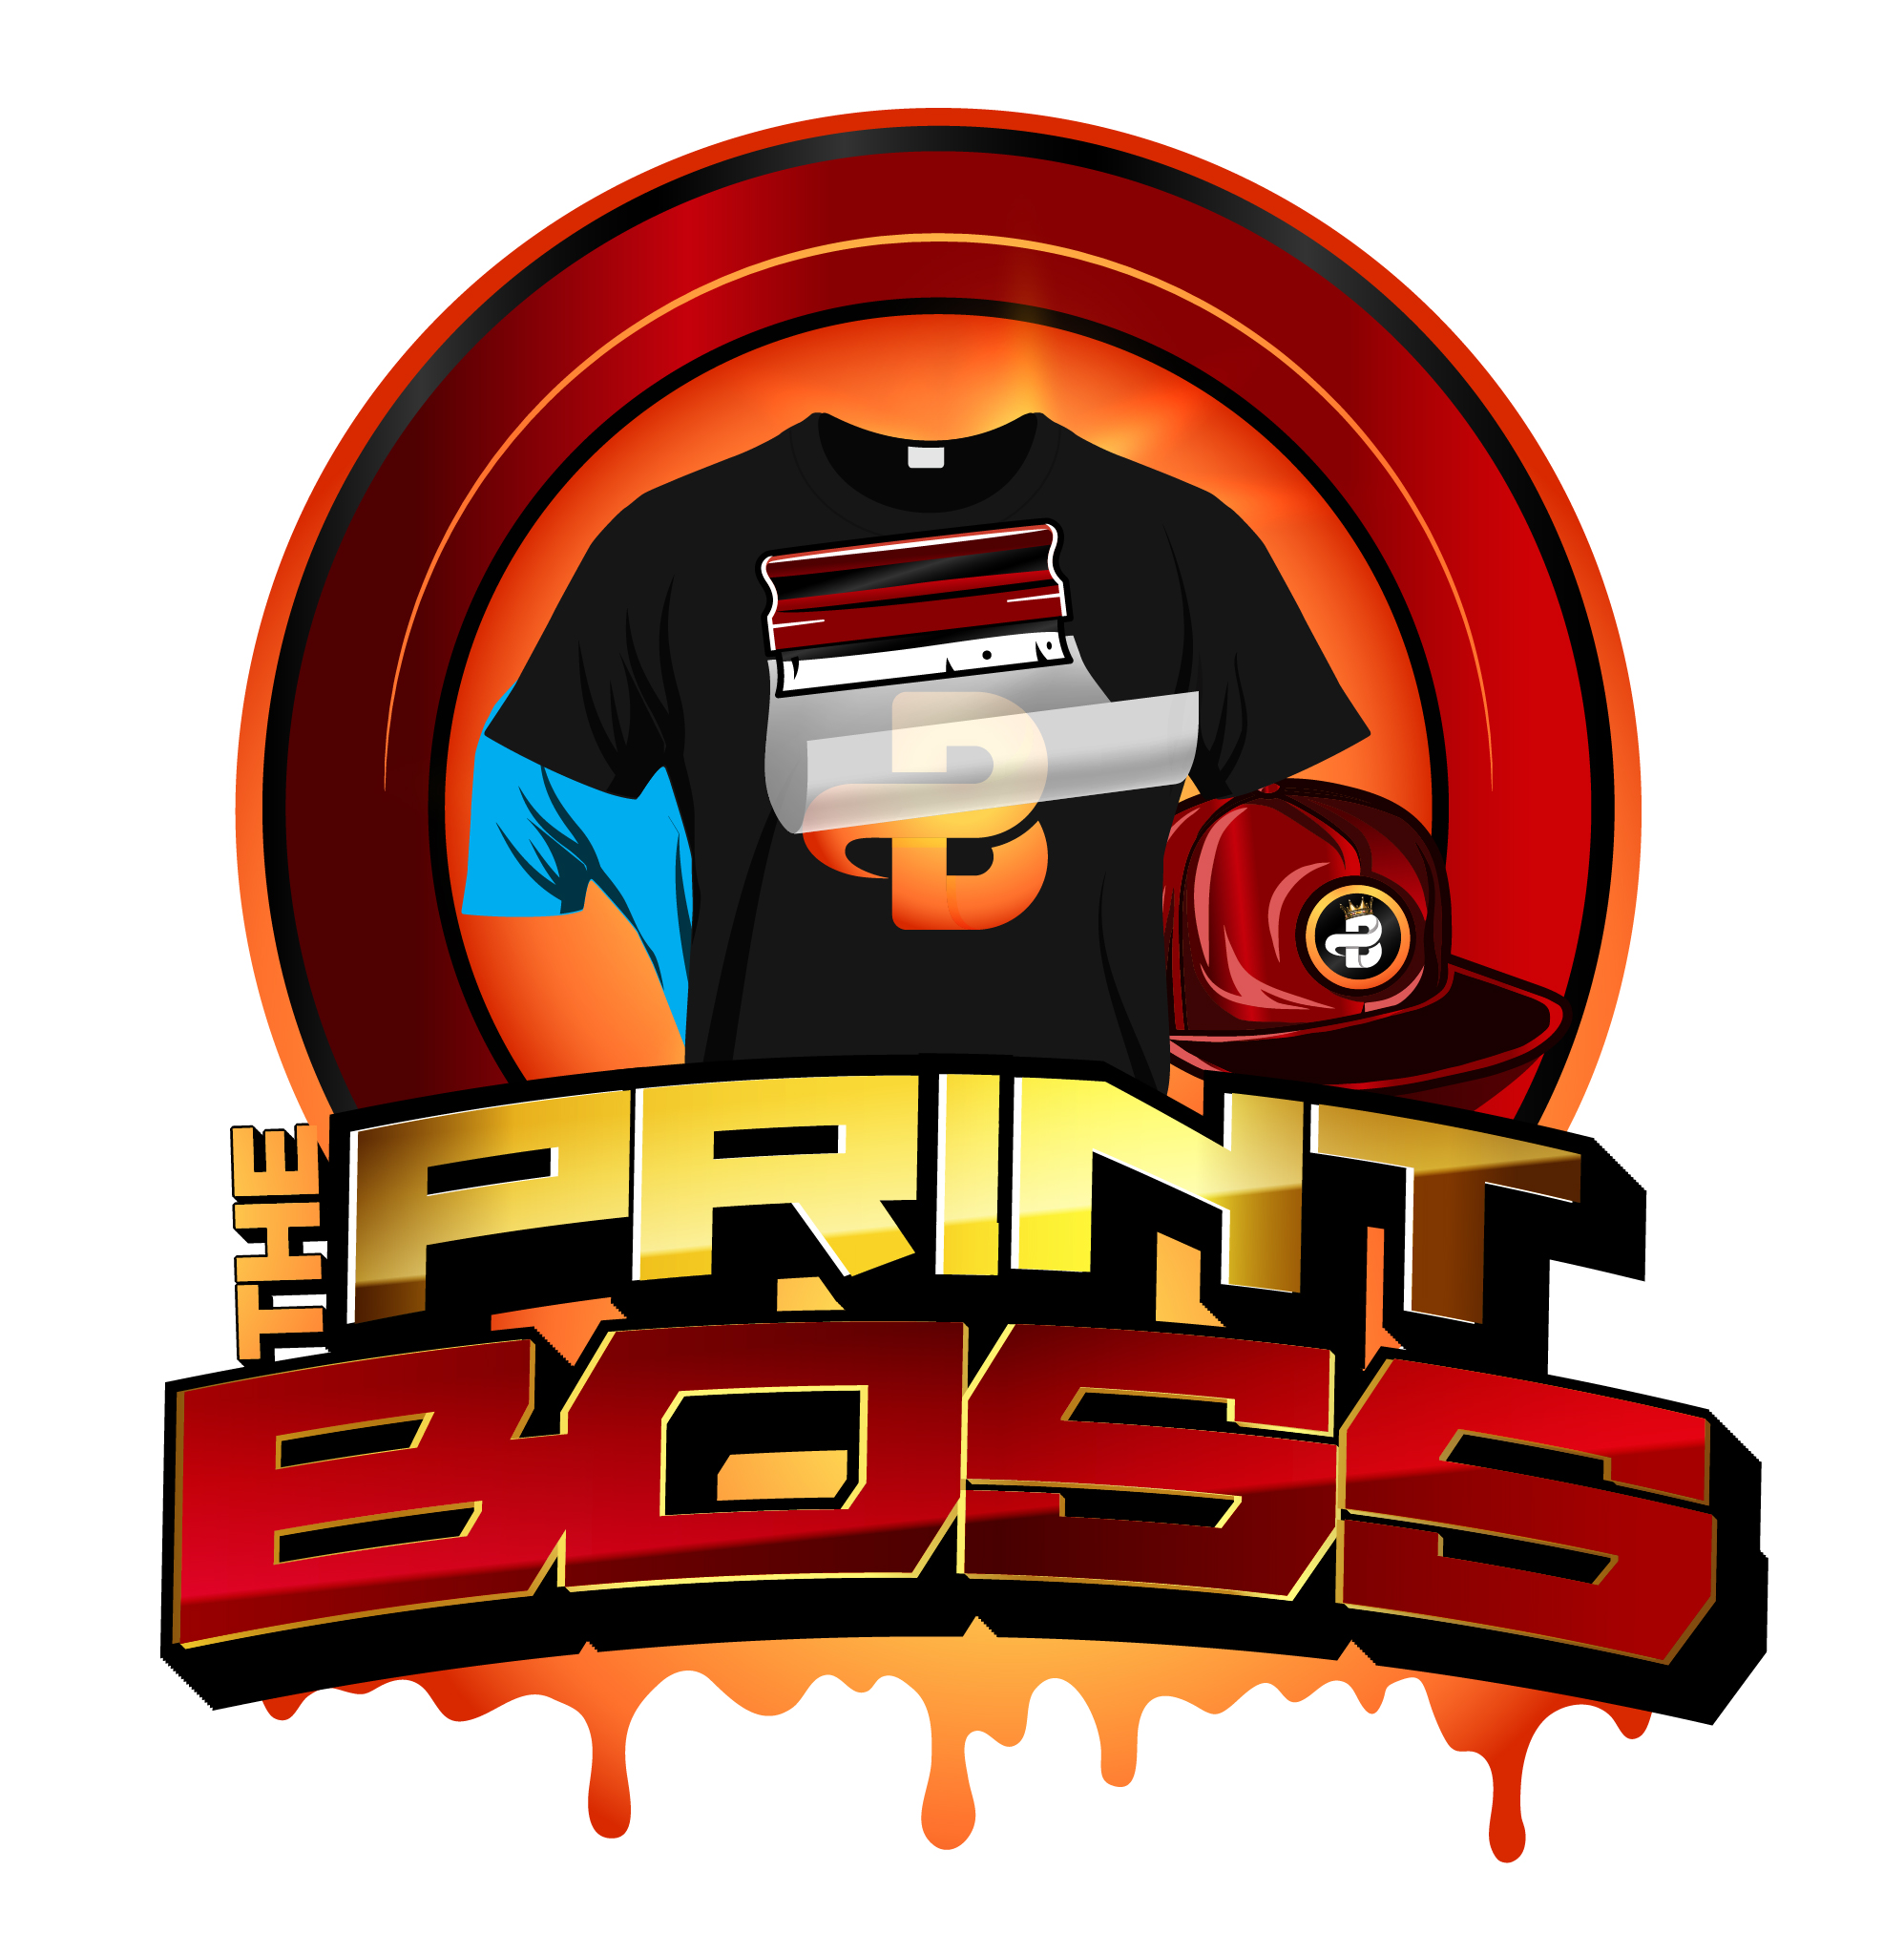 The Print Boss